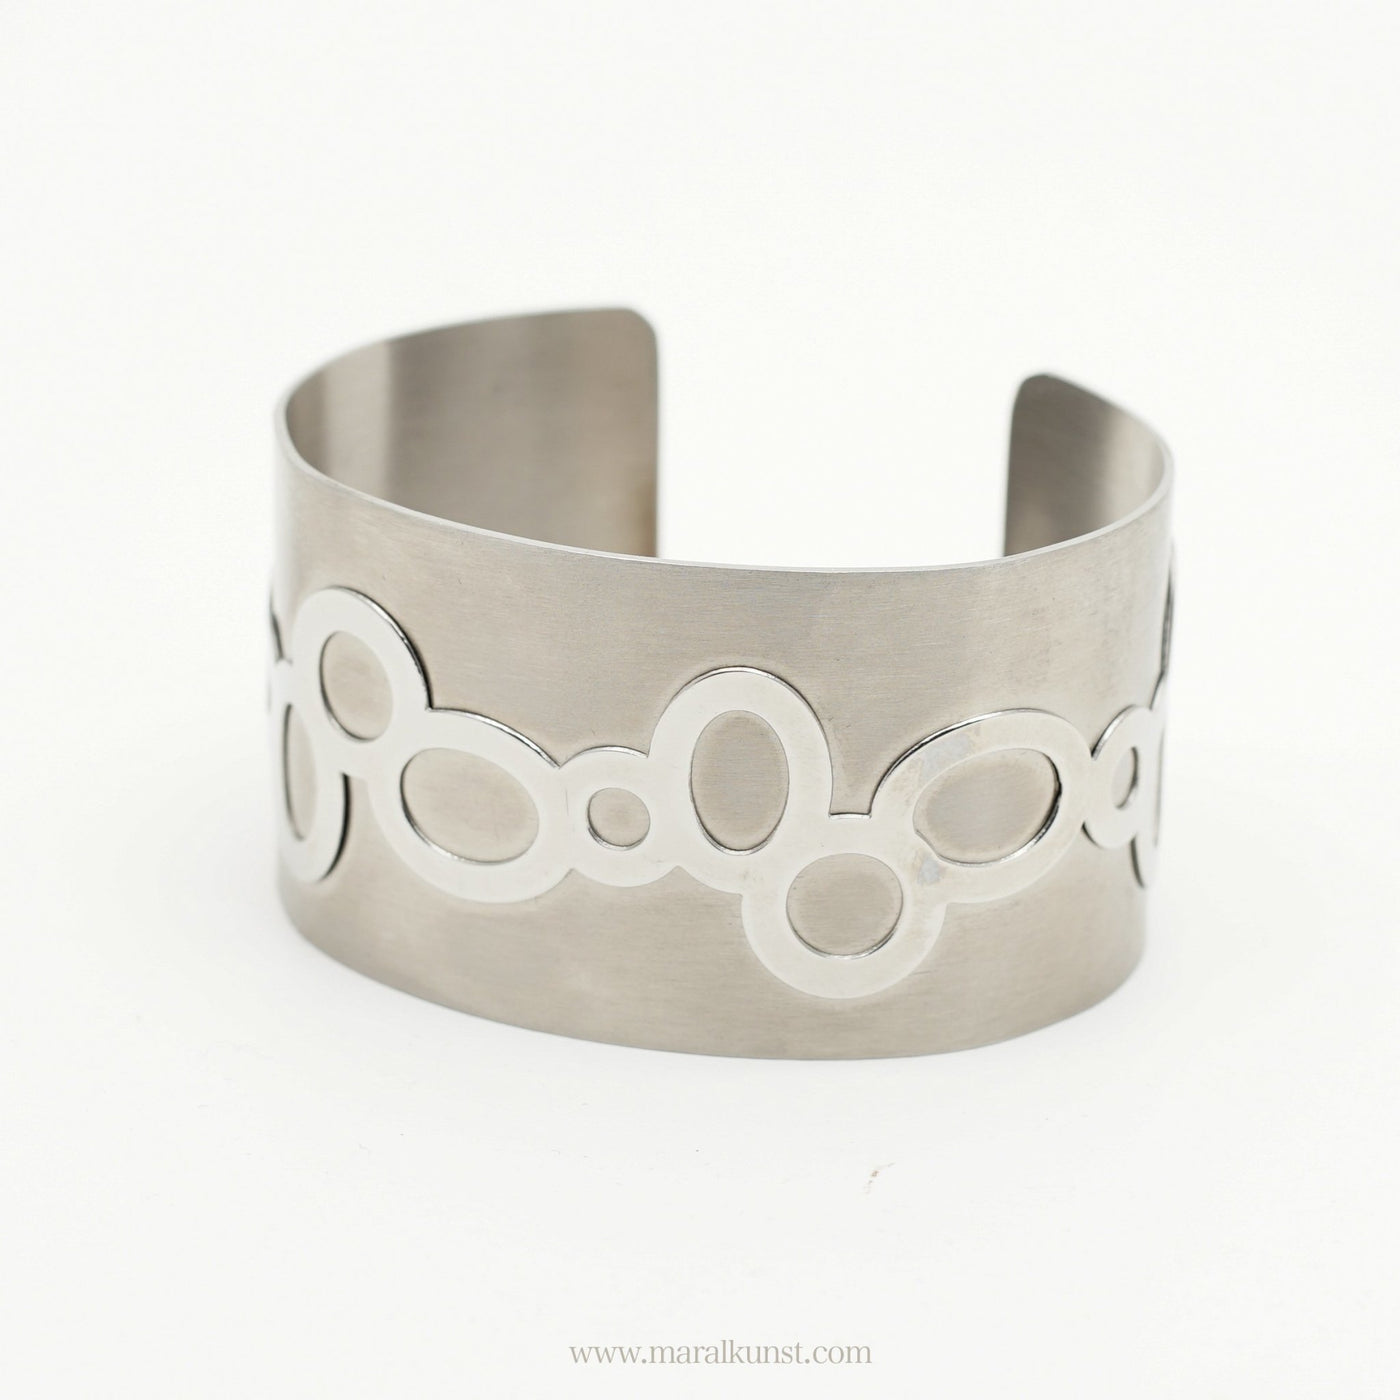 Circle Link Chain Cuff Bracelet - Maral Kunst Jewelry